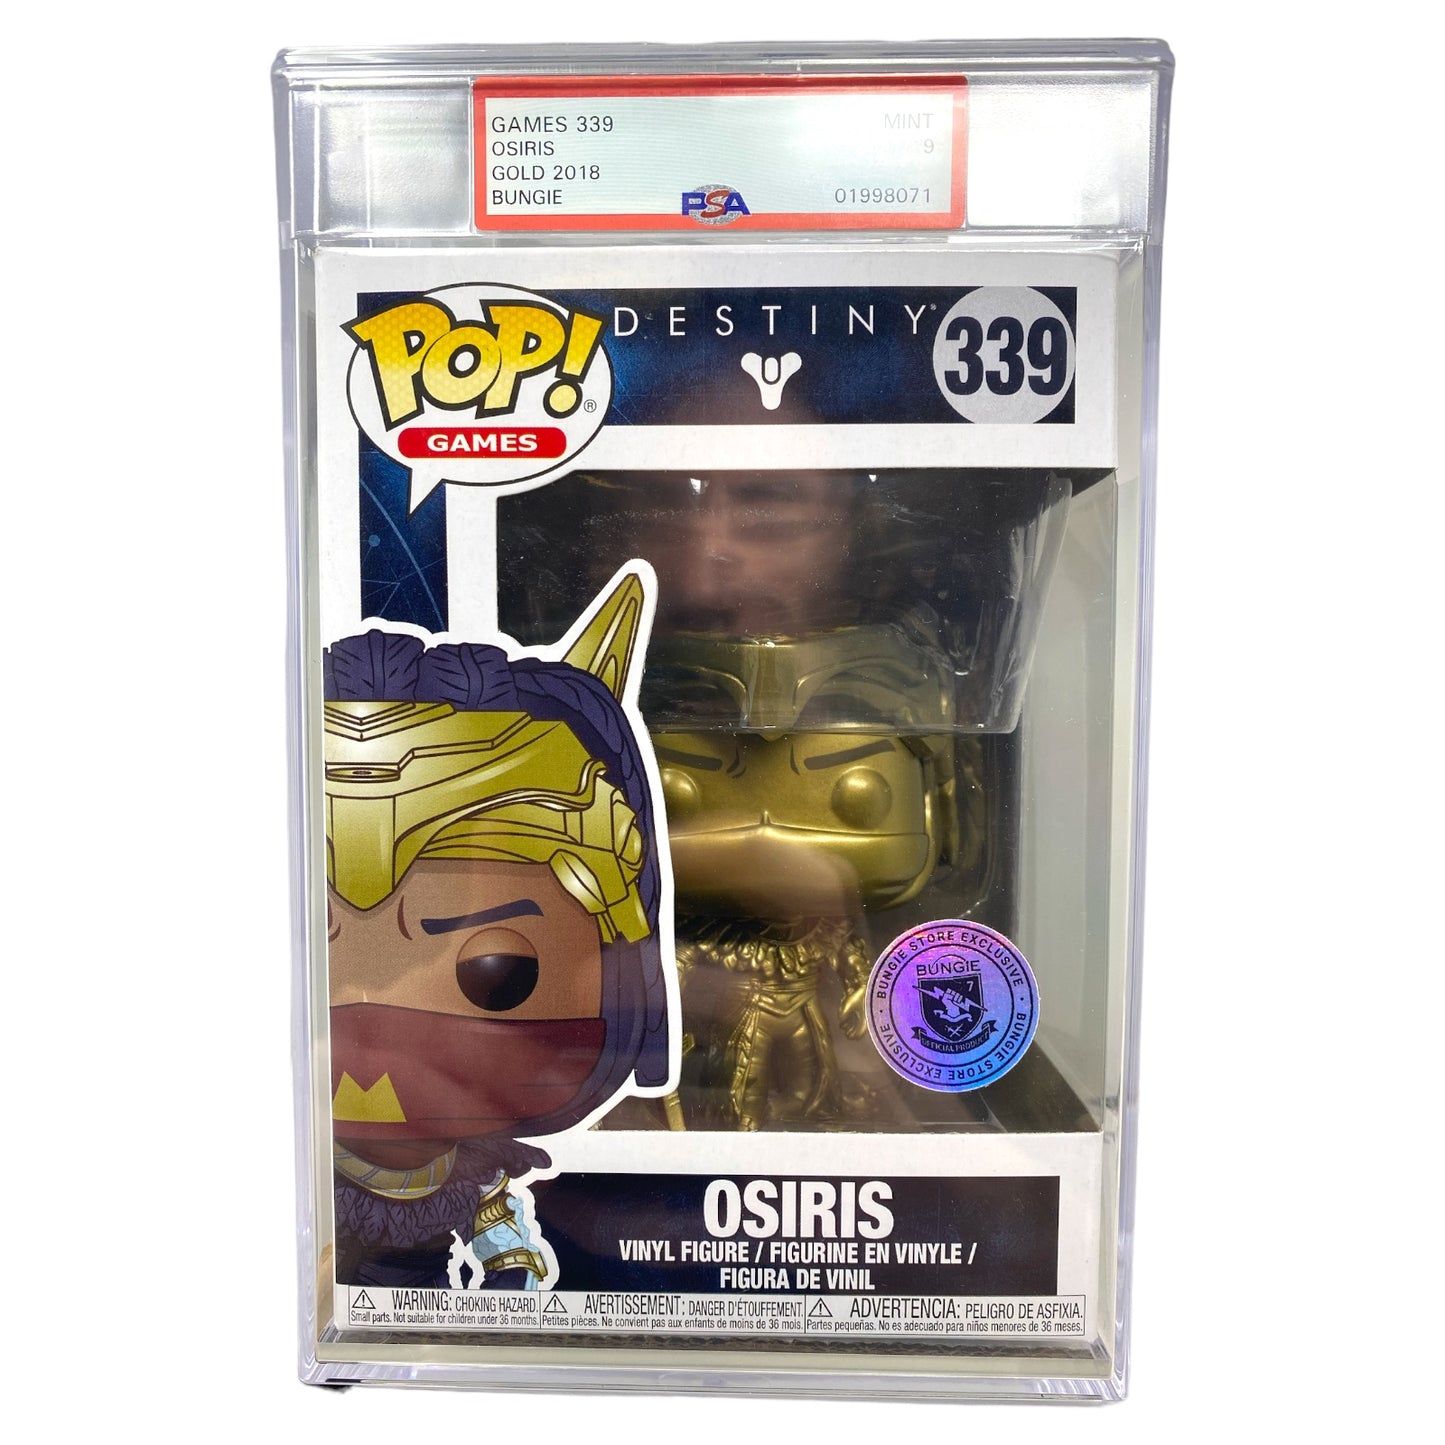 PSA Grade 9 Gold 2018 Osiris 339 Bungie Exclusive